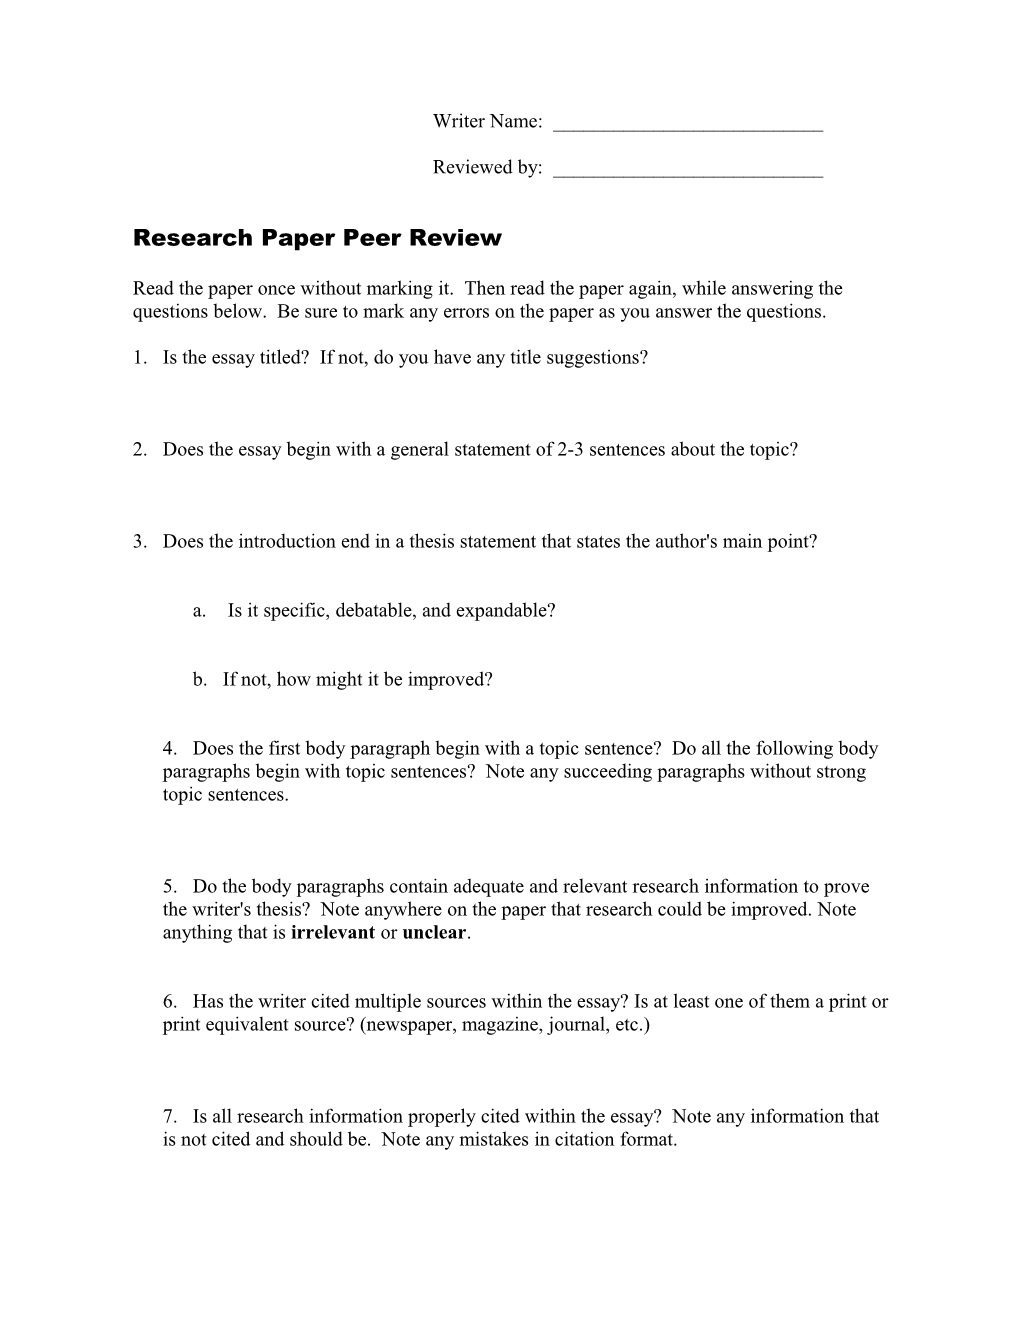 Research Paper Peer Review